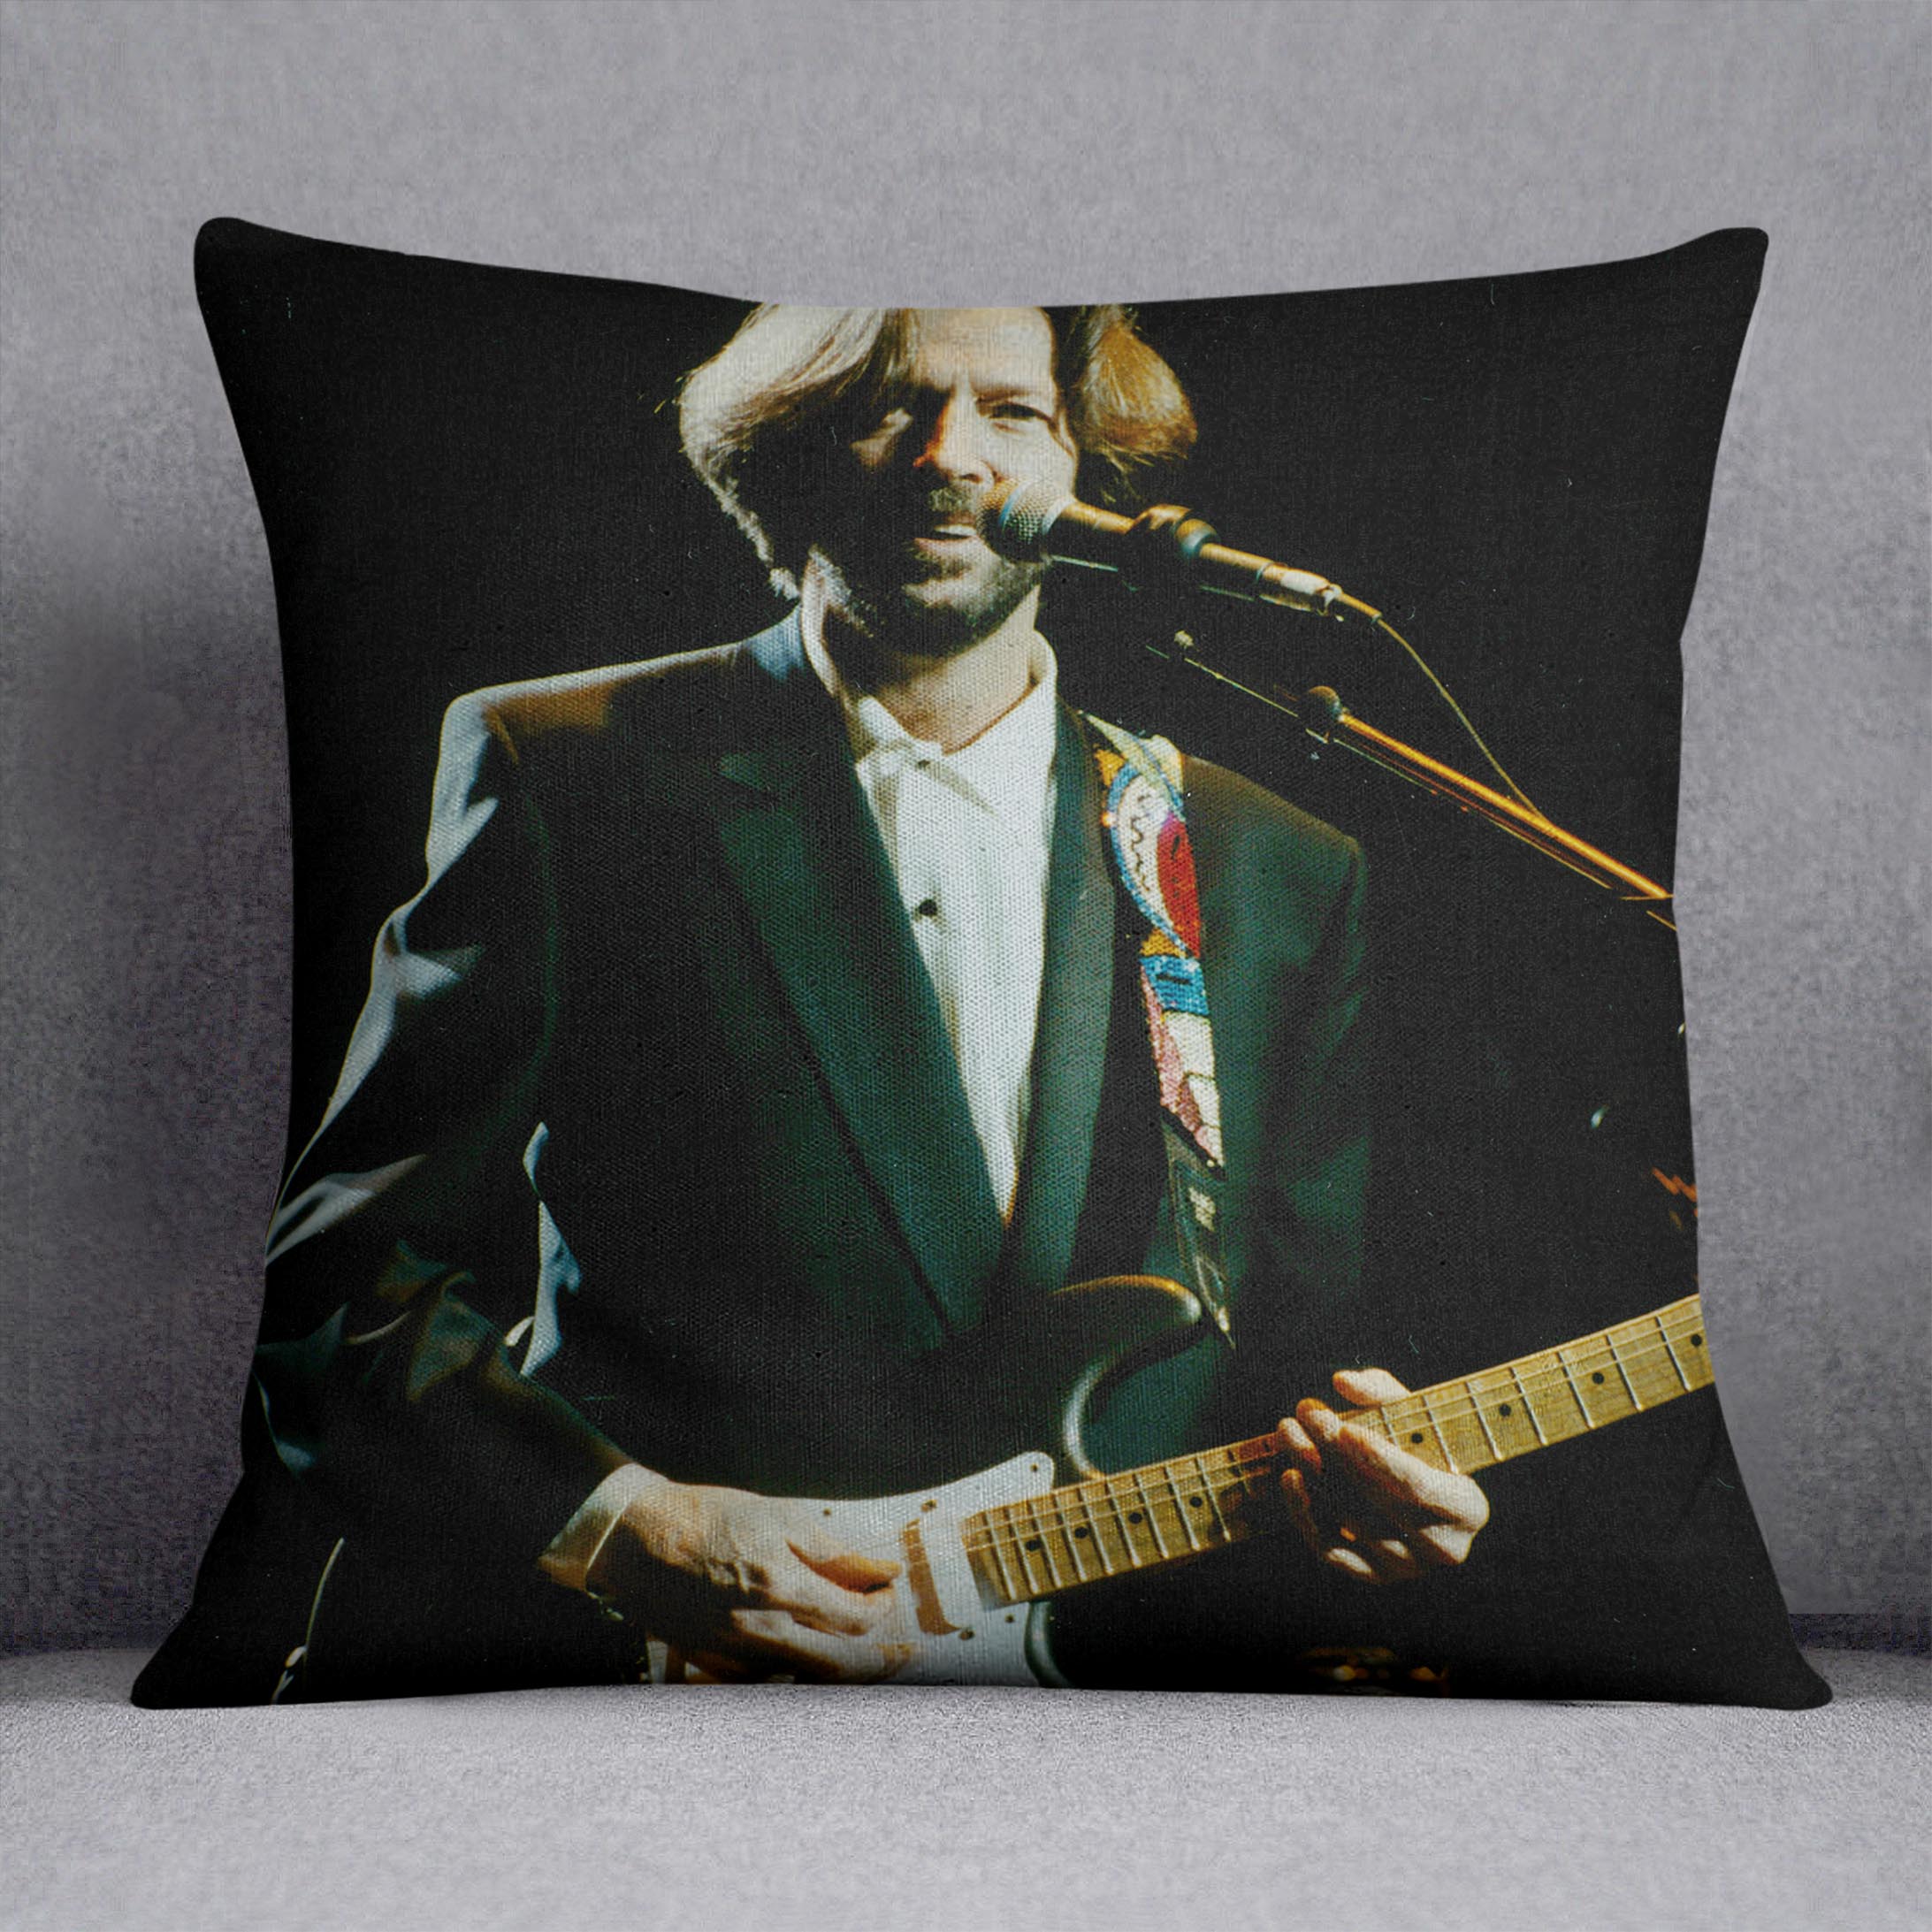 Eric Clapton on stage Cushion